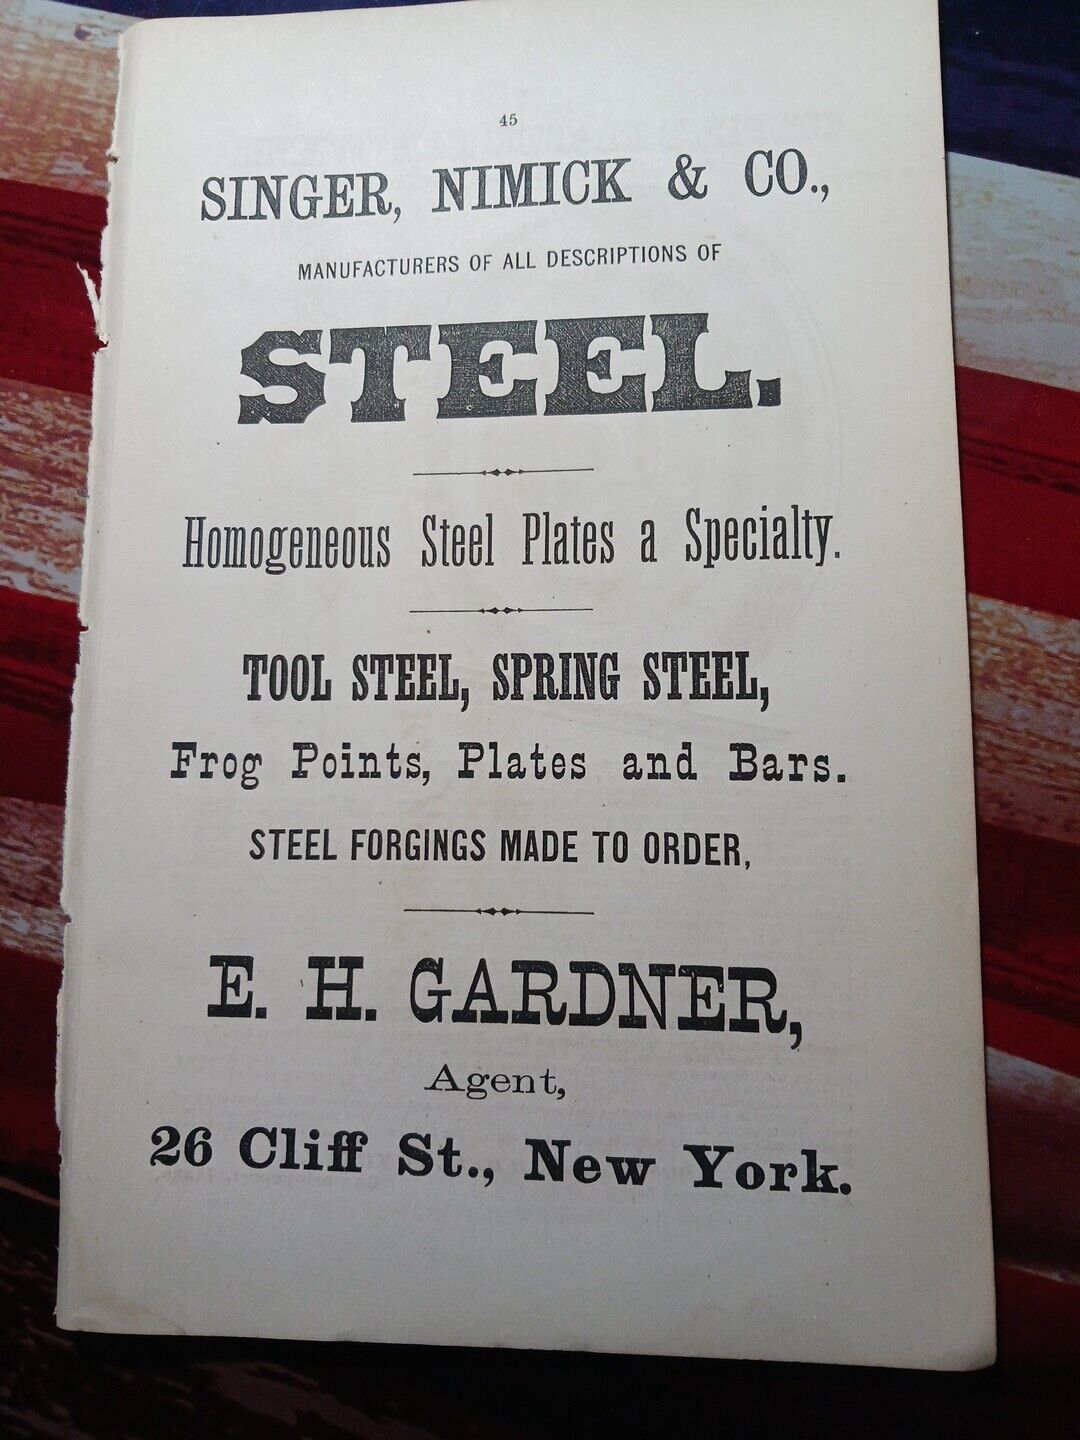 1875 Print Ad SINGER NIMICK & COMPANY railroad steel Forgings EH GARDNER NYC